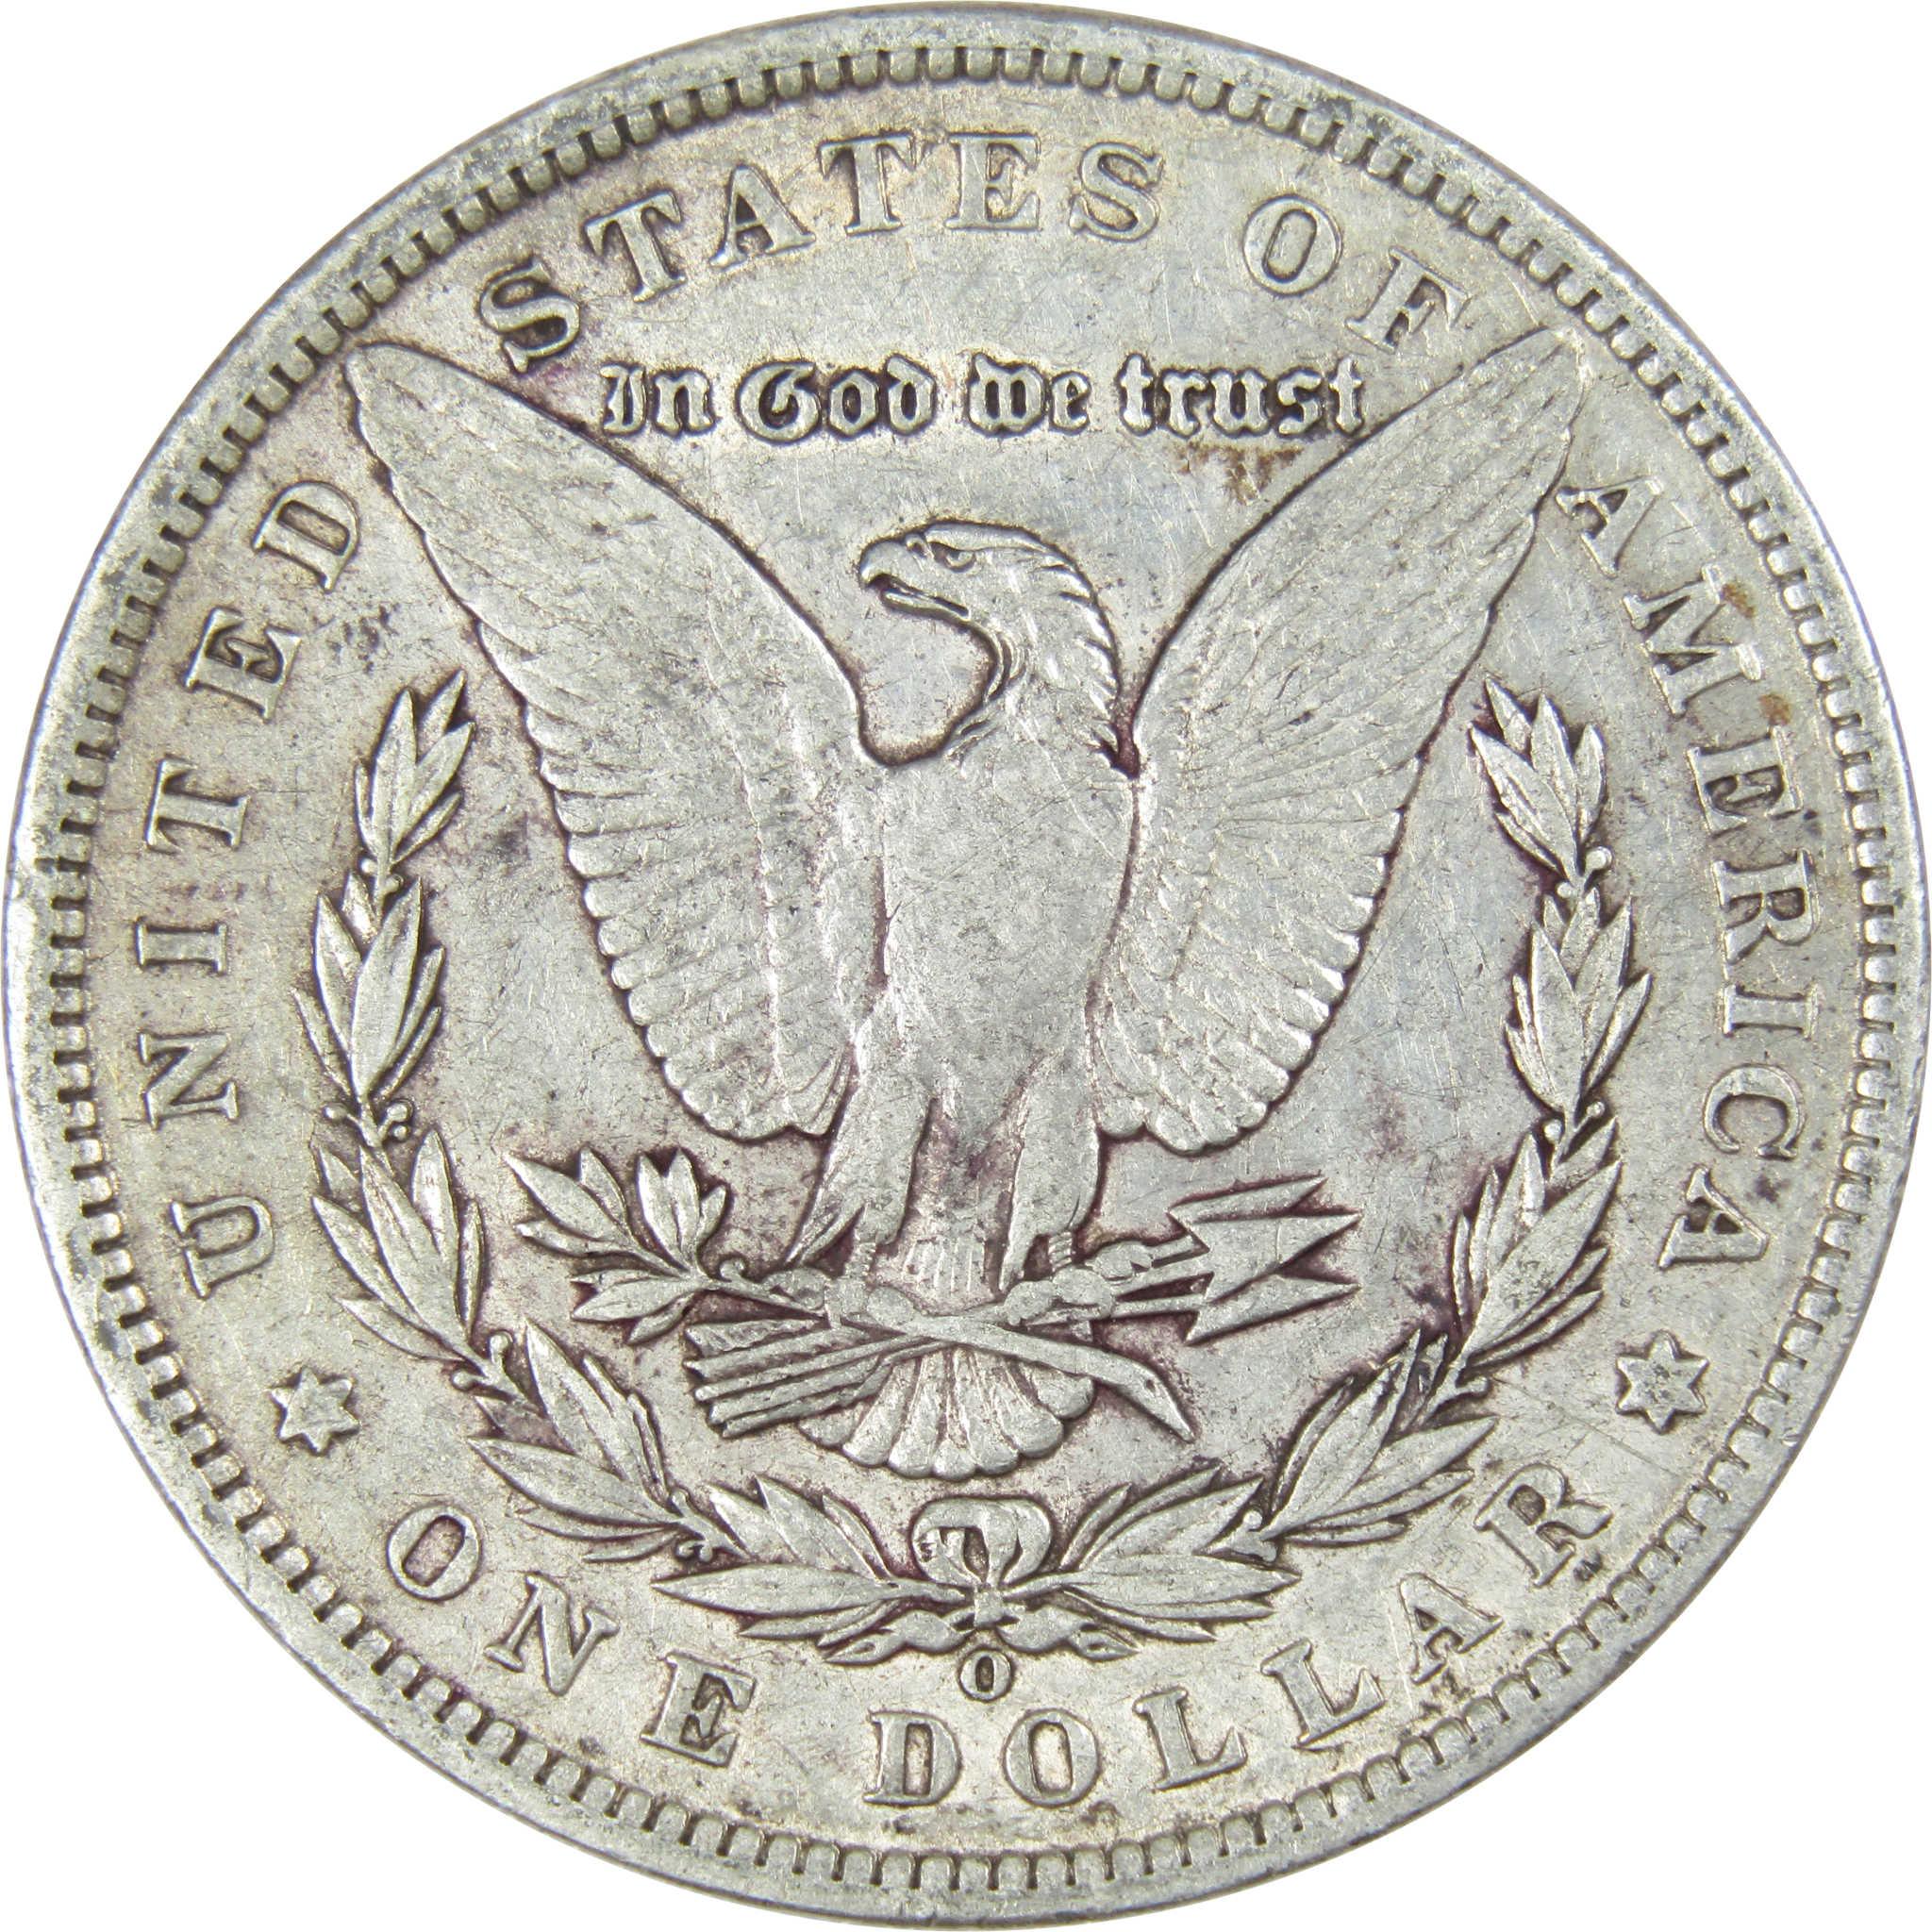 1886 O Morgan Dollar XF EF Extremely Fine 90% Silver $1 US Coin Collectible - Morgan coin - Morgan silver dollar - Morgan silver dollar for sale - Profile Coins &amp; Collectibles